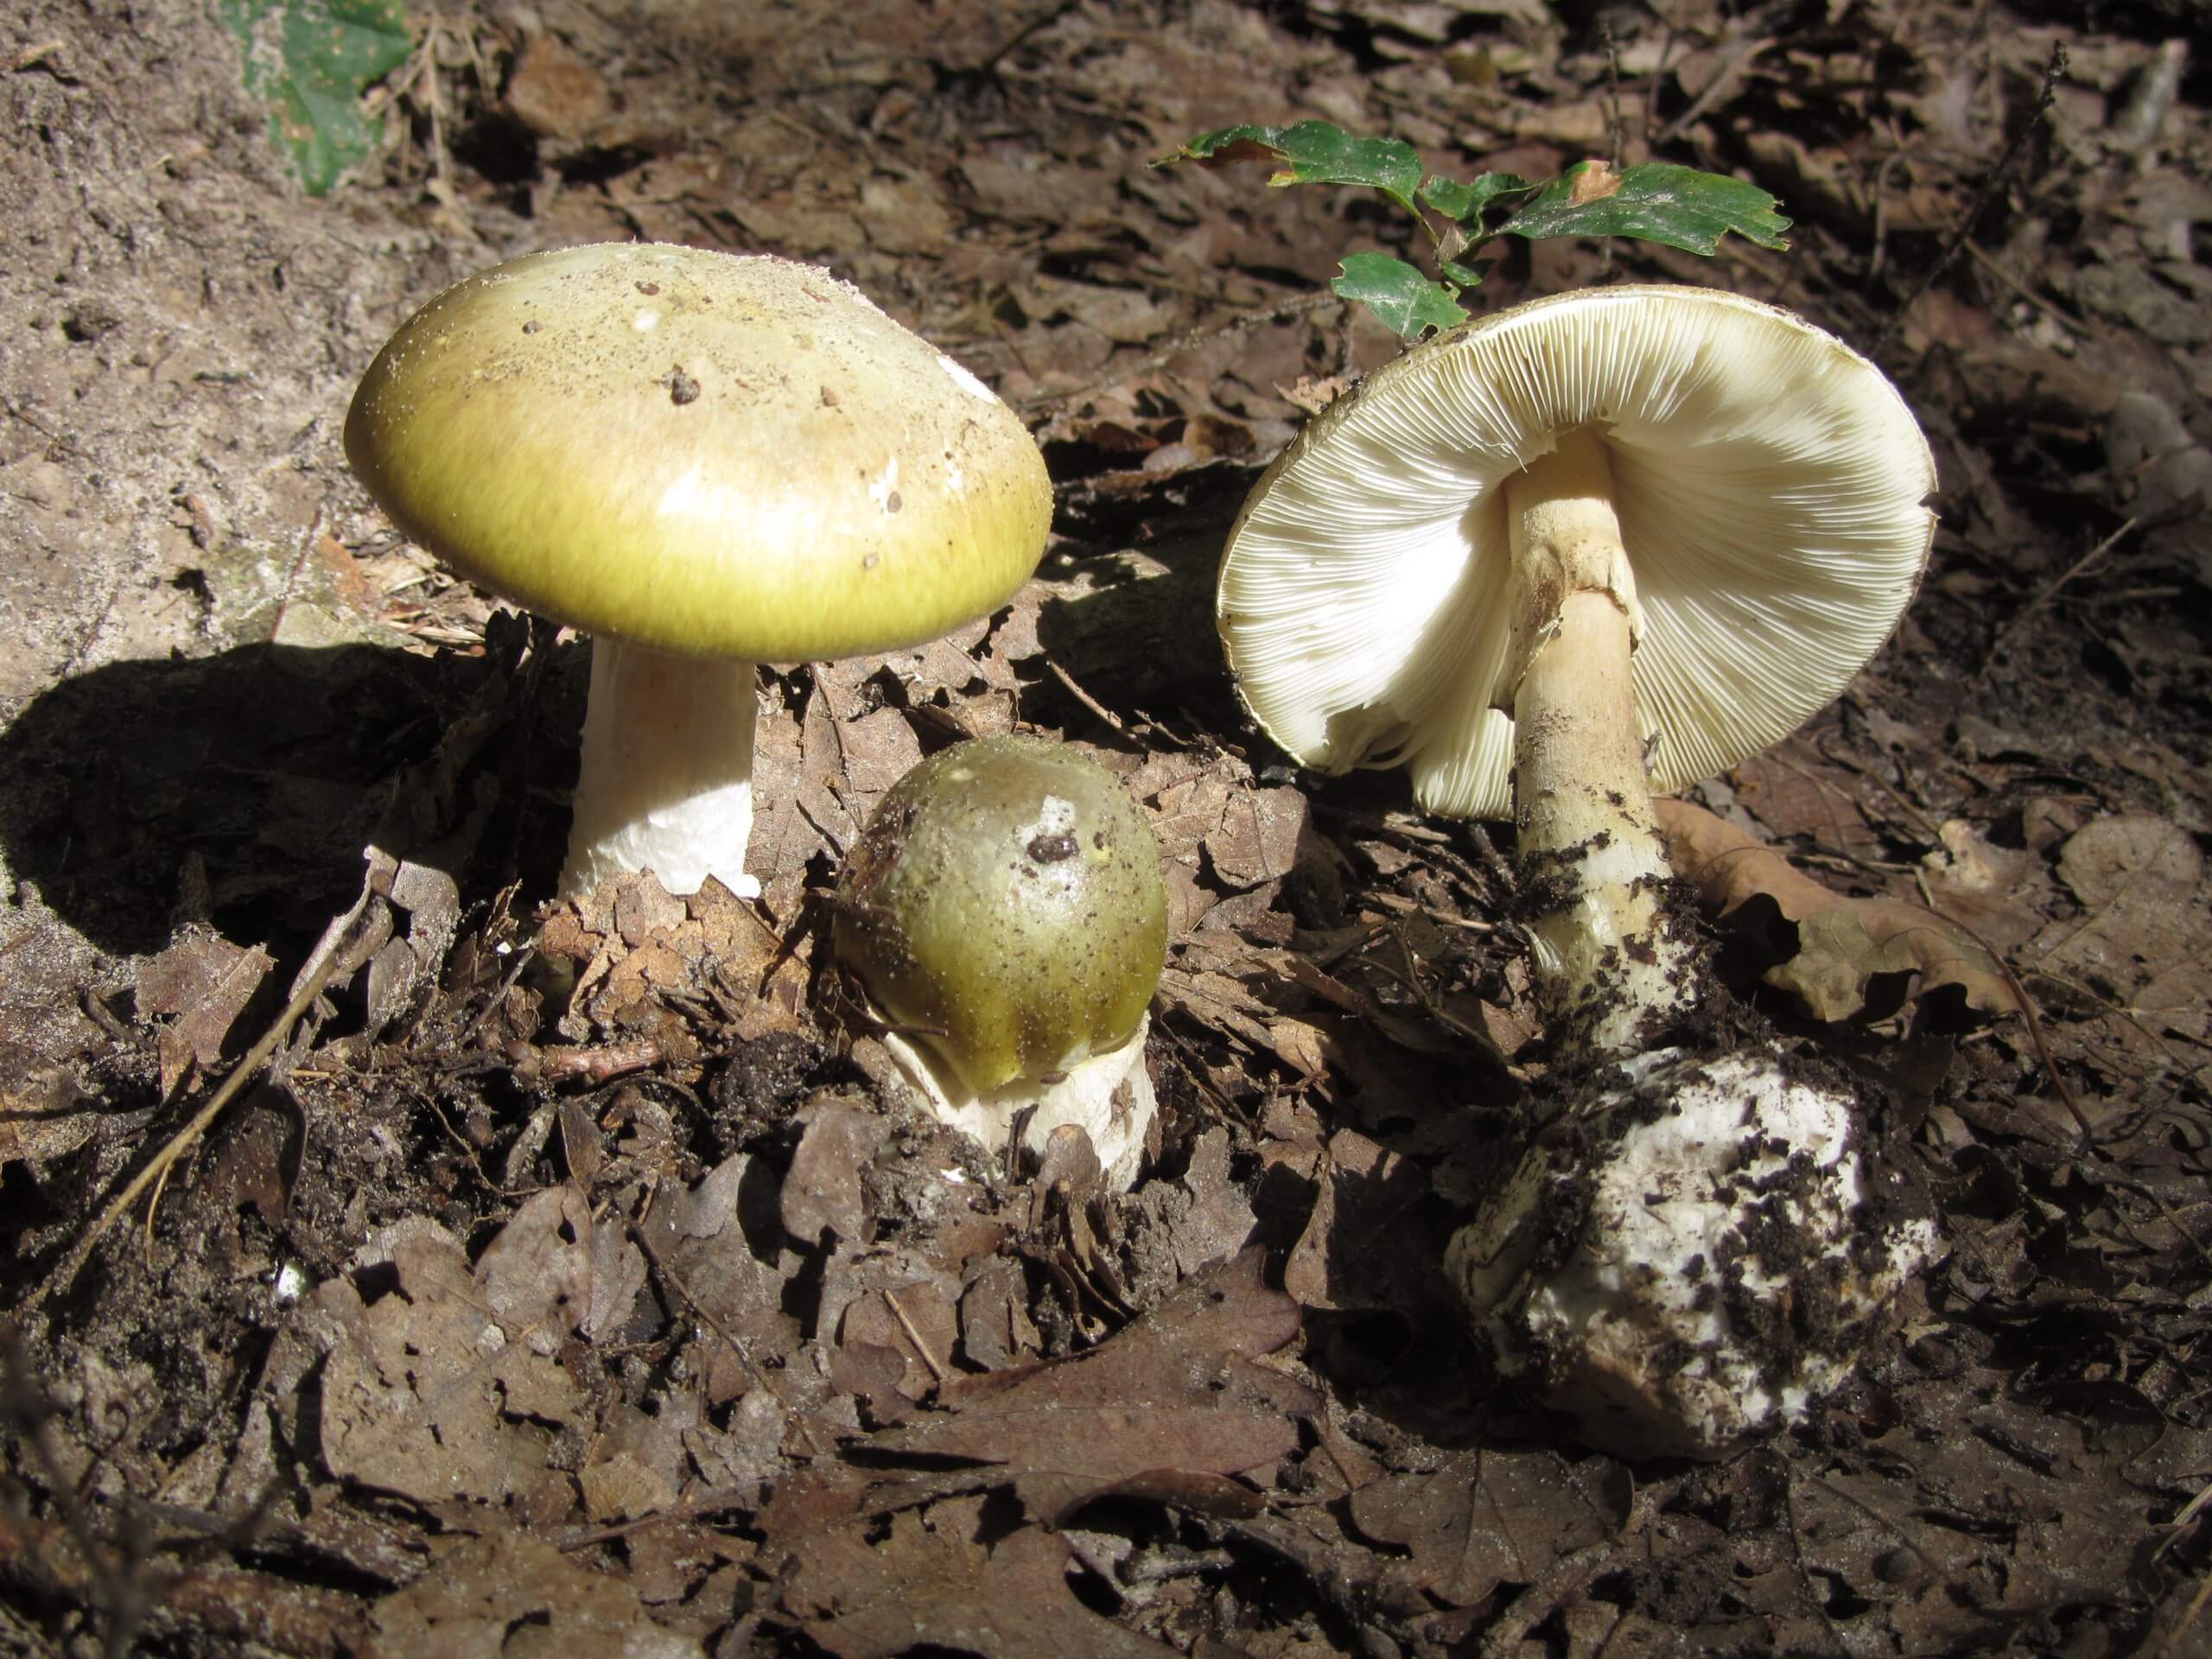 A cluster of deadly Deathcap mushrooms (Amanita phalloides)